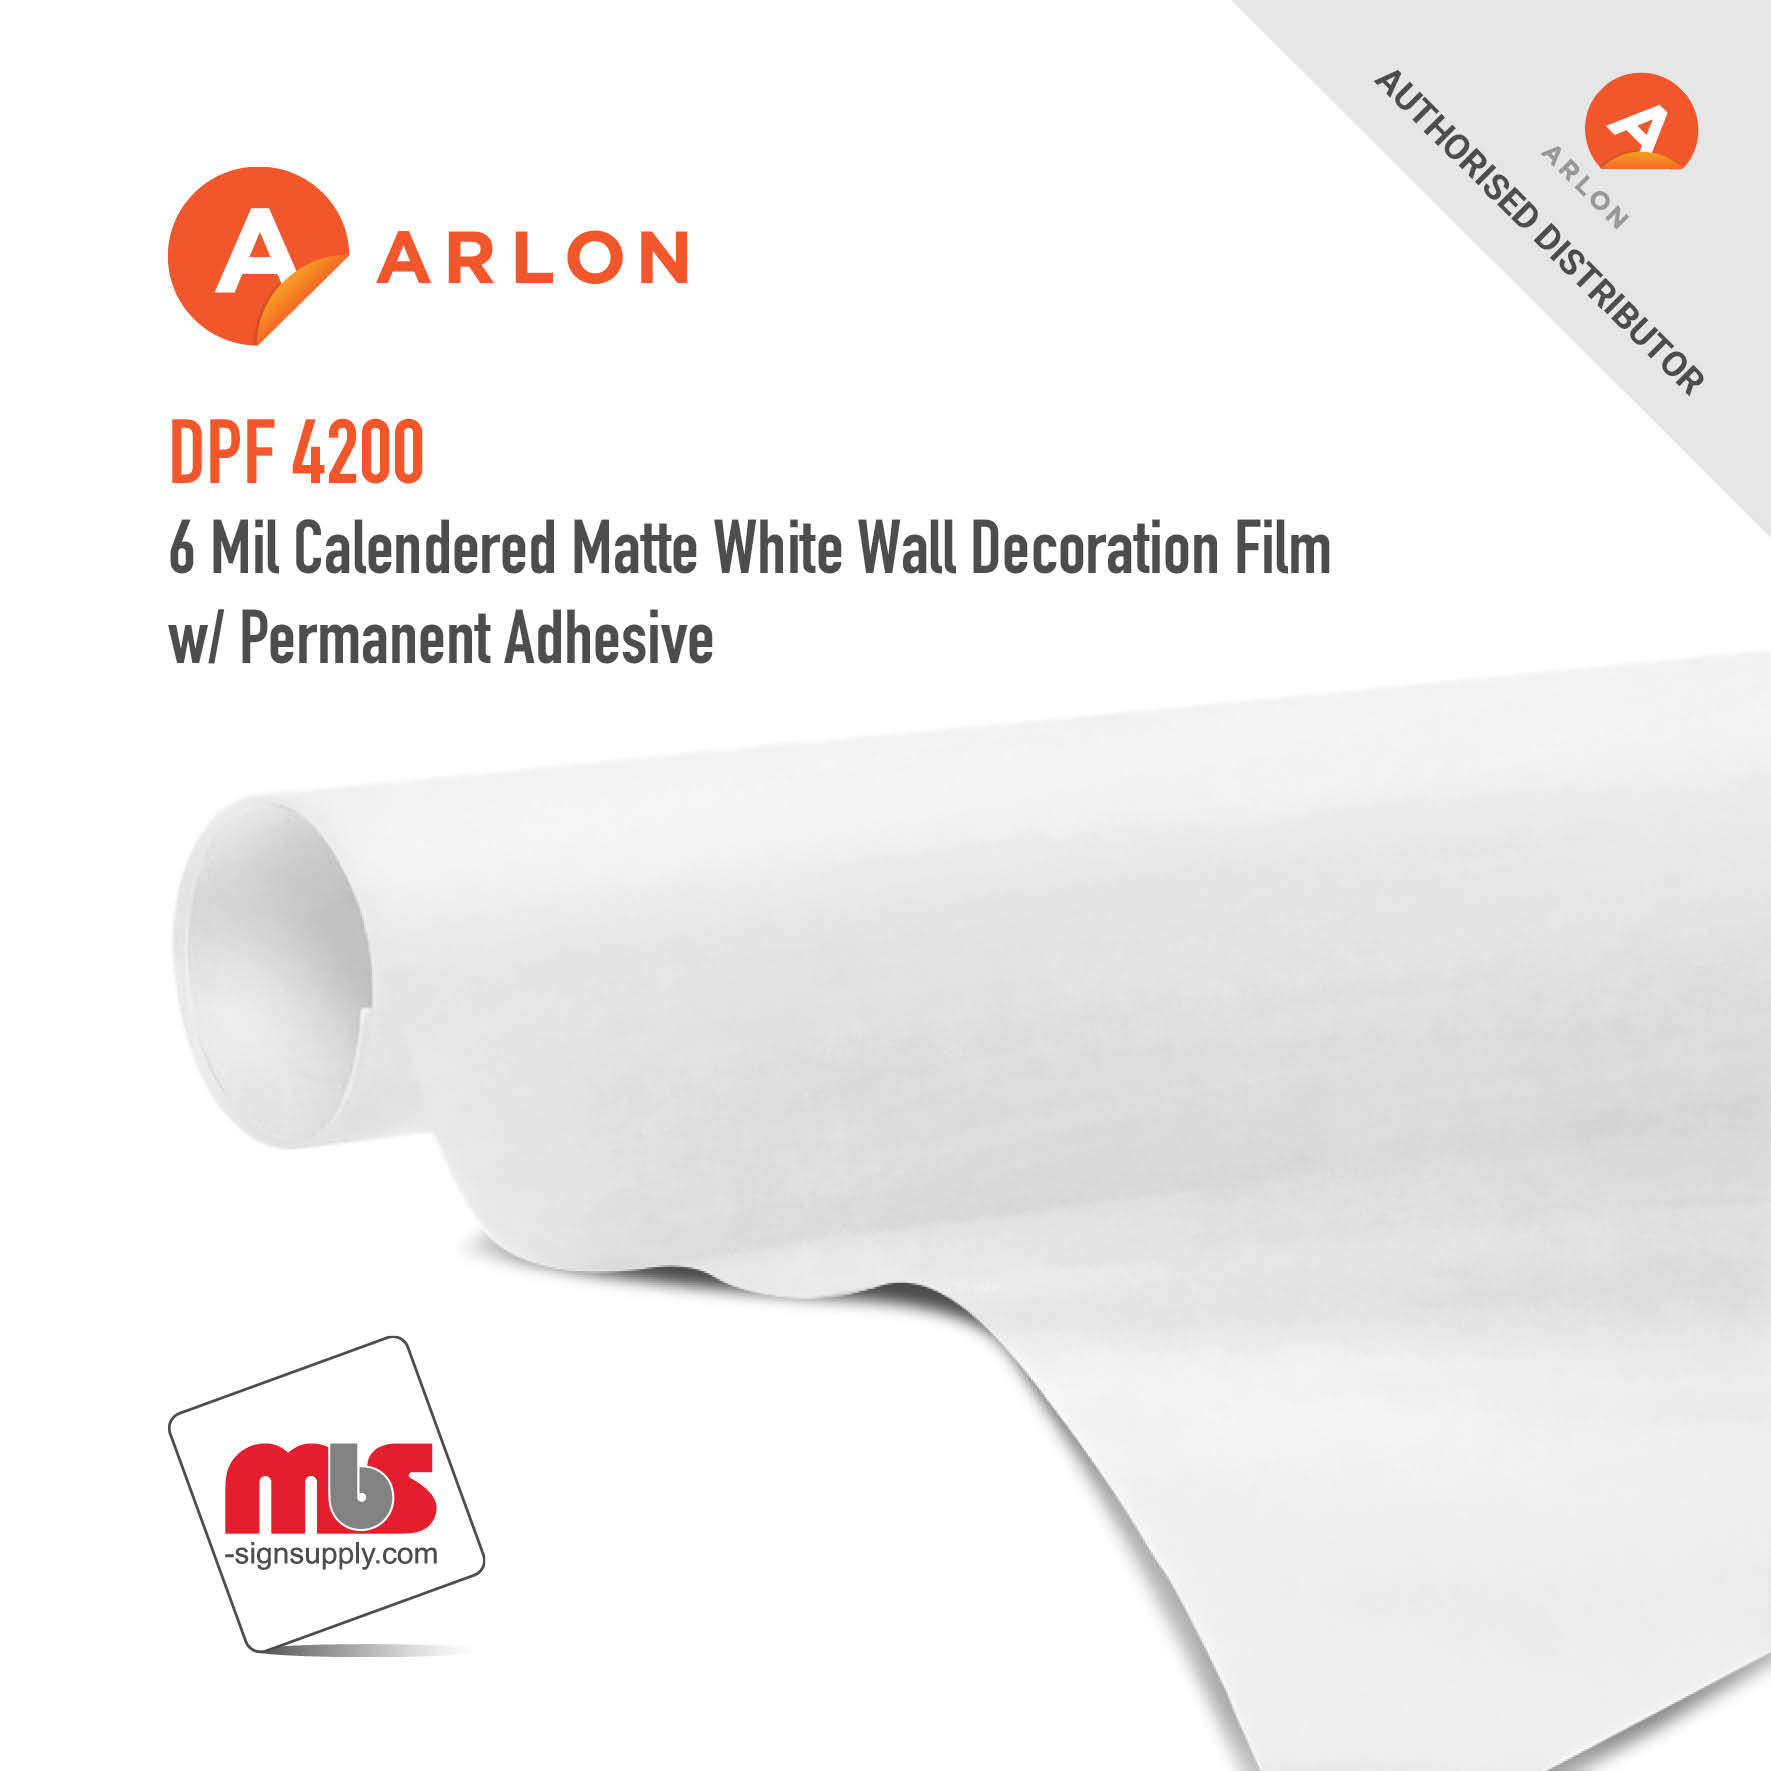 60'' x 25 Yard Roll - Arlon DPF 4200 6 Mil Calendered Matte White Wall Decoration Film w/ Permanent Adhesive